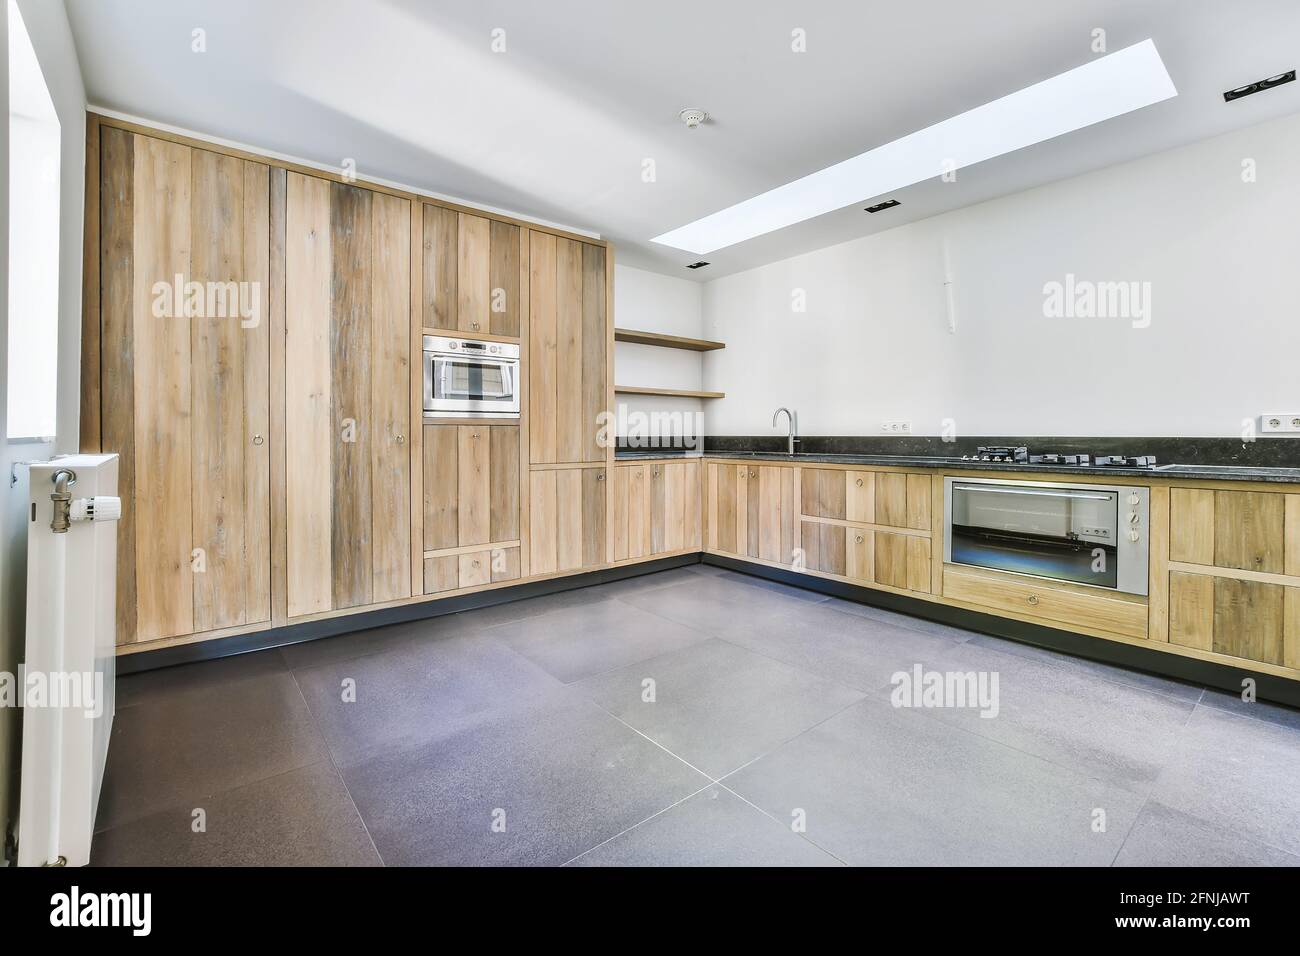 Spacious kitchen with wooden furniture Stock Photo